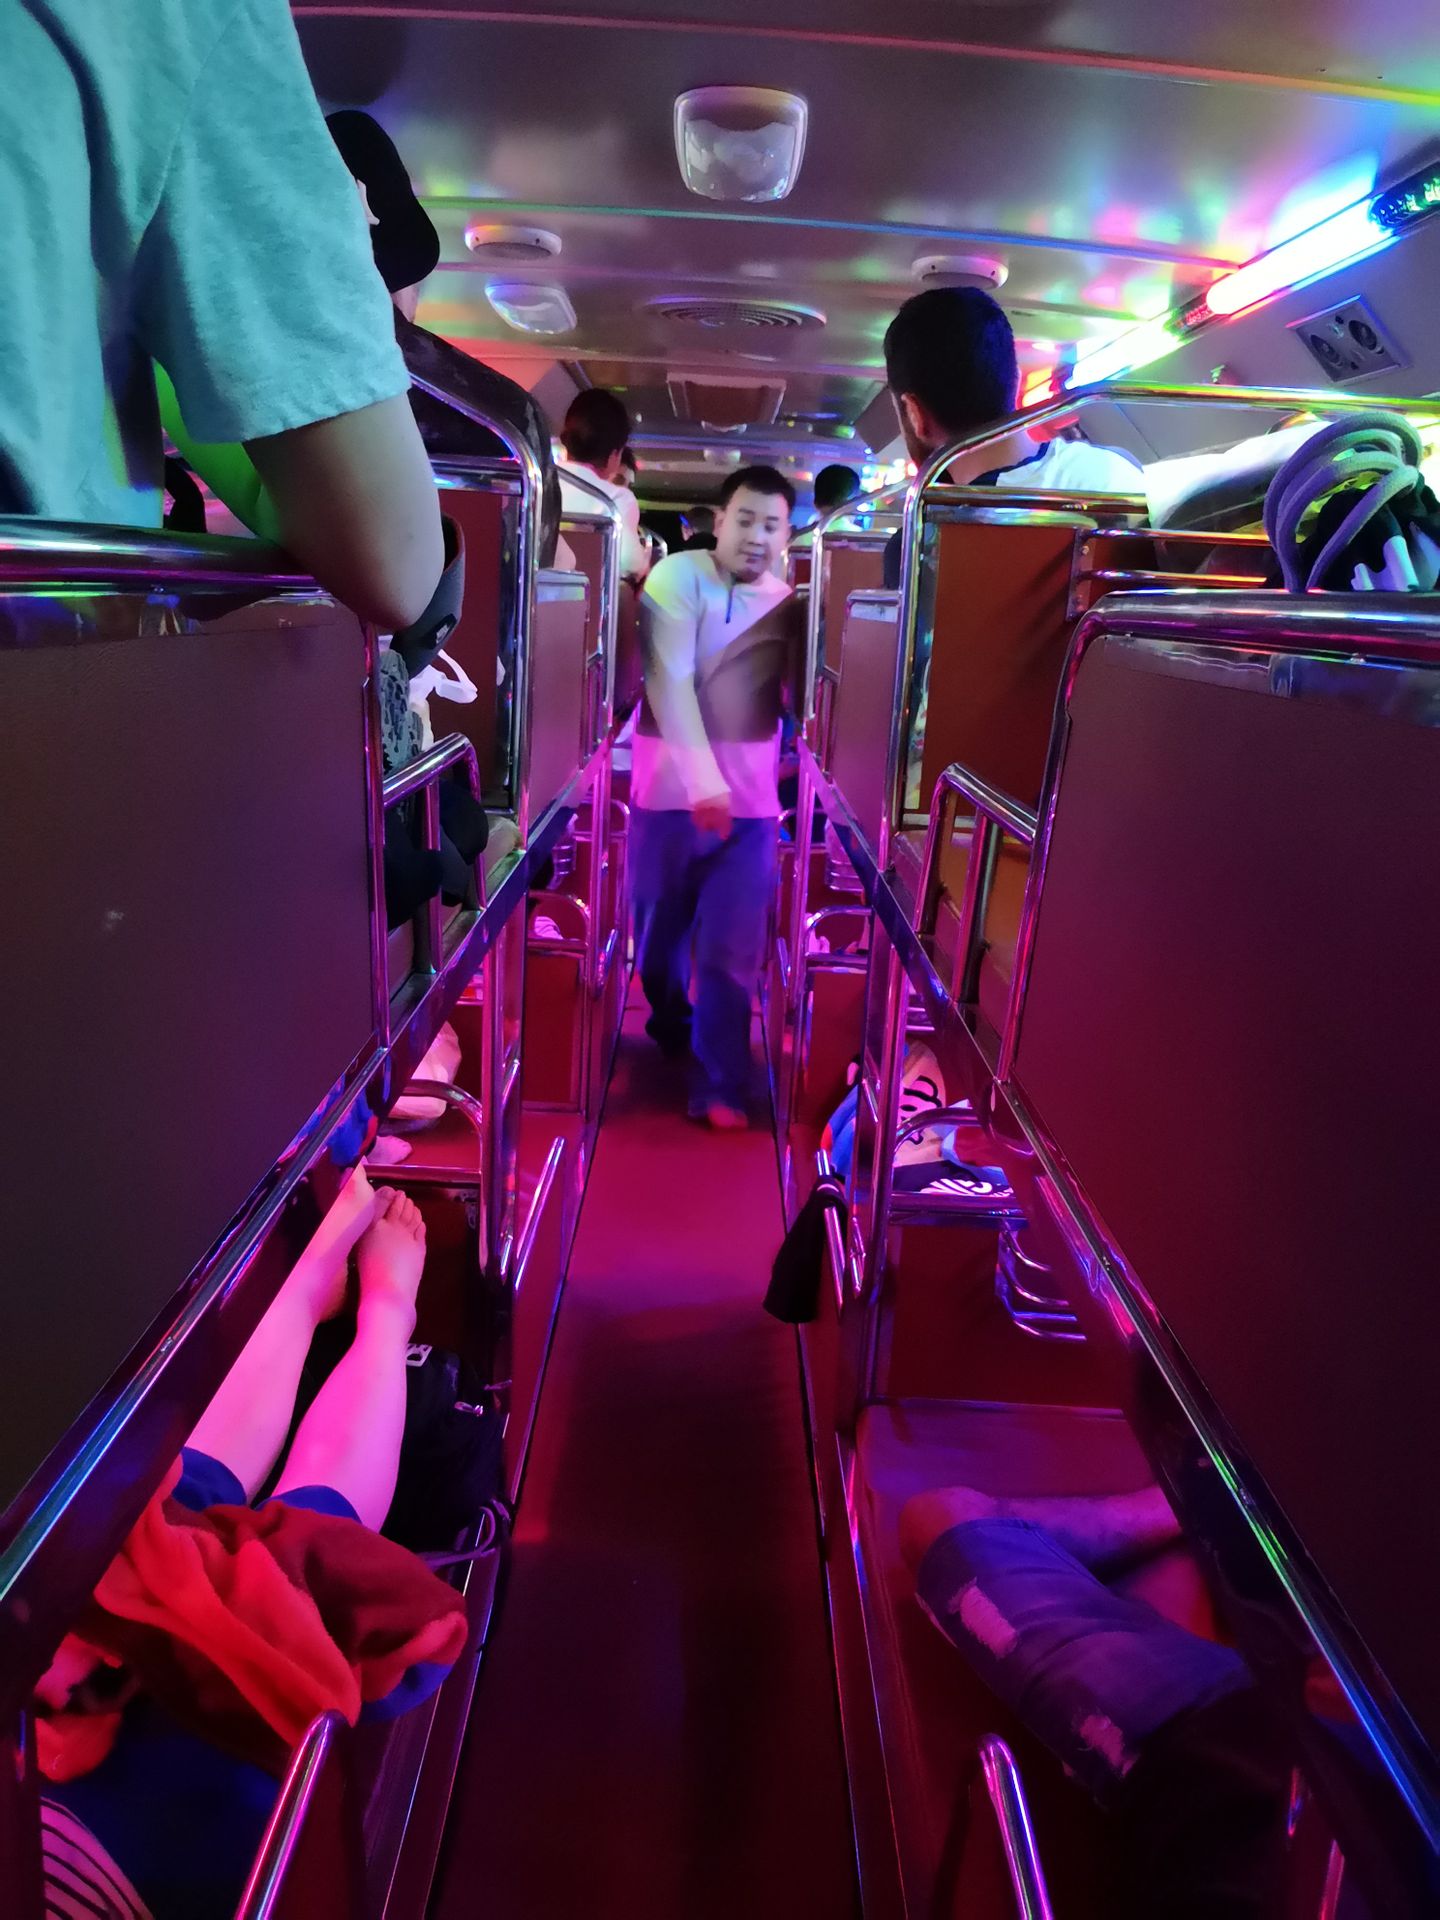 Laotian Sleeping Bus